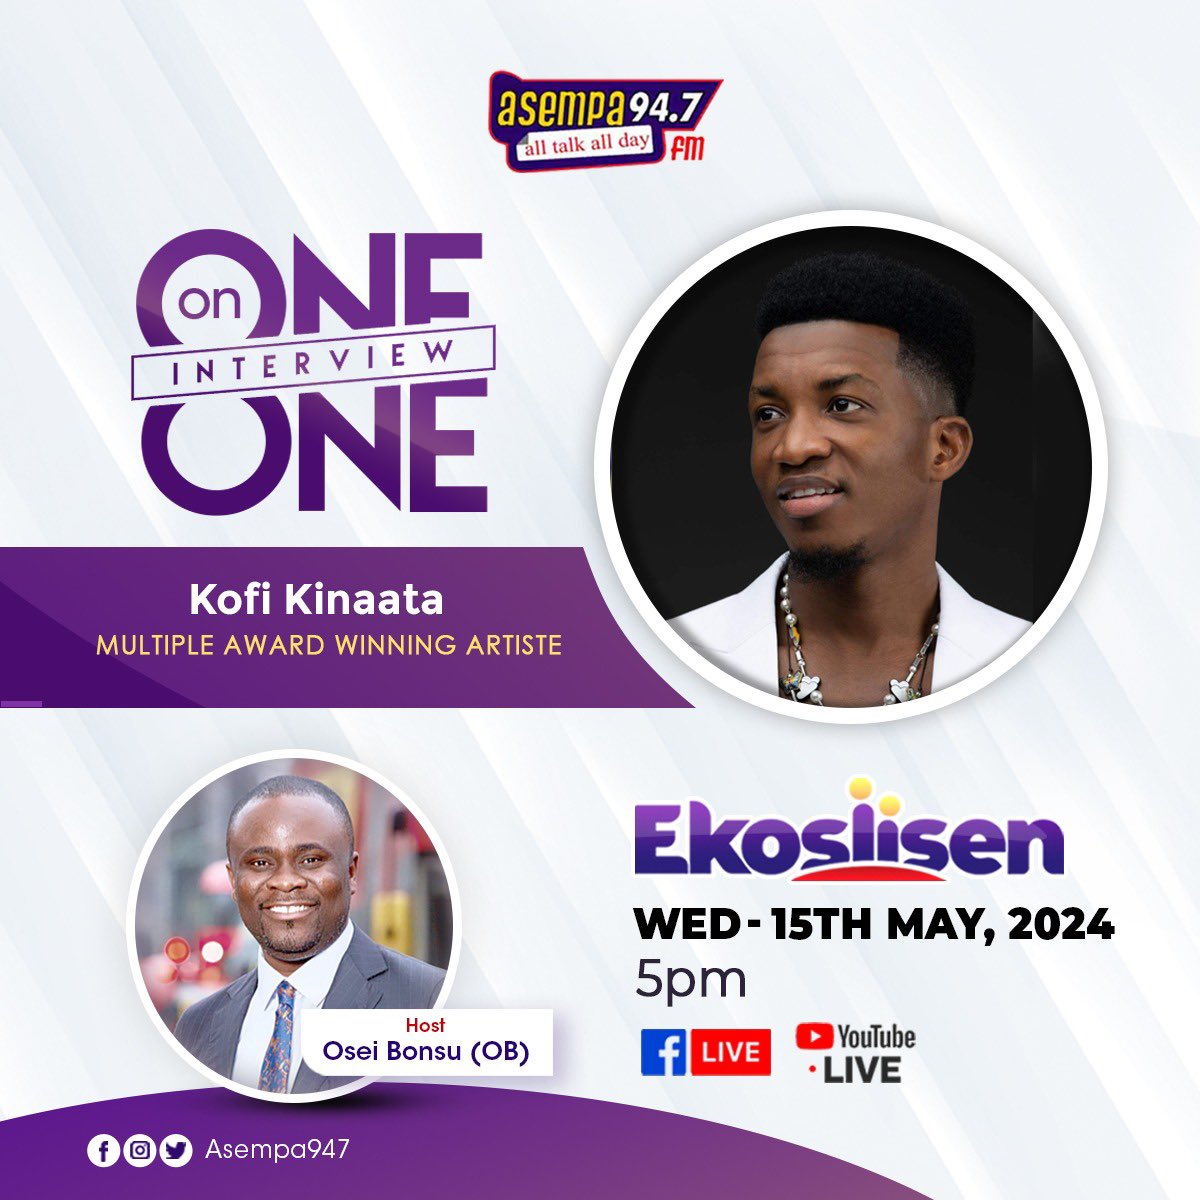 This evening!
One on One with Osei Bonsu 
On Asempa 94.7 FM 

#KofiOOKofi #TeamMooove